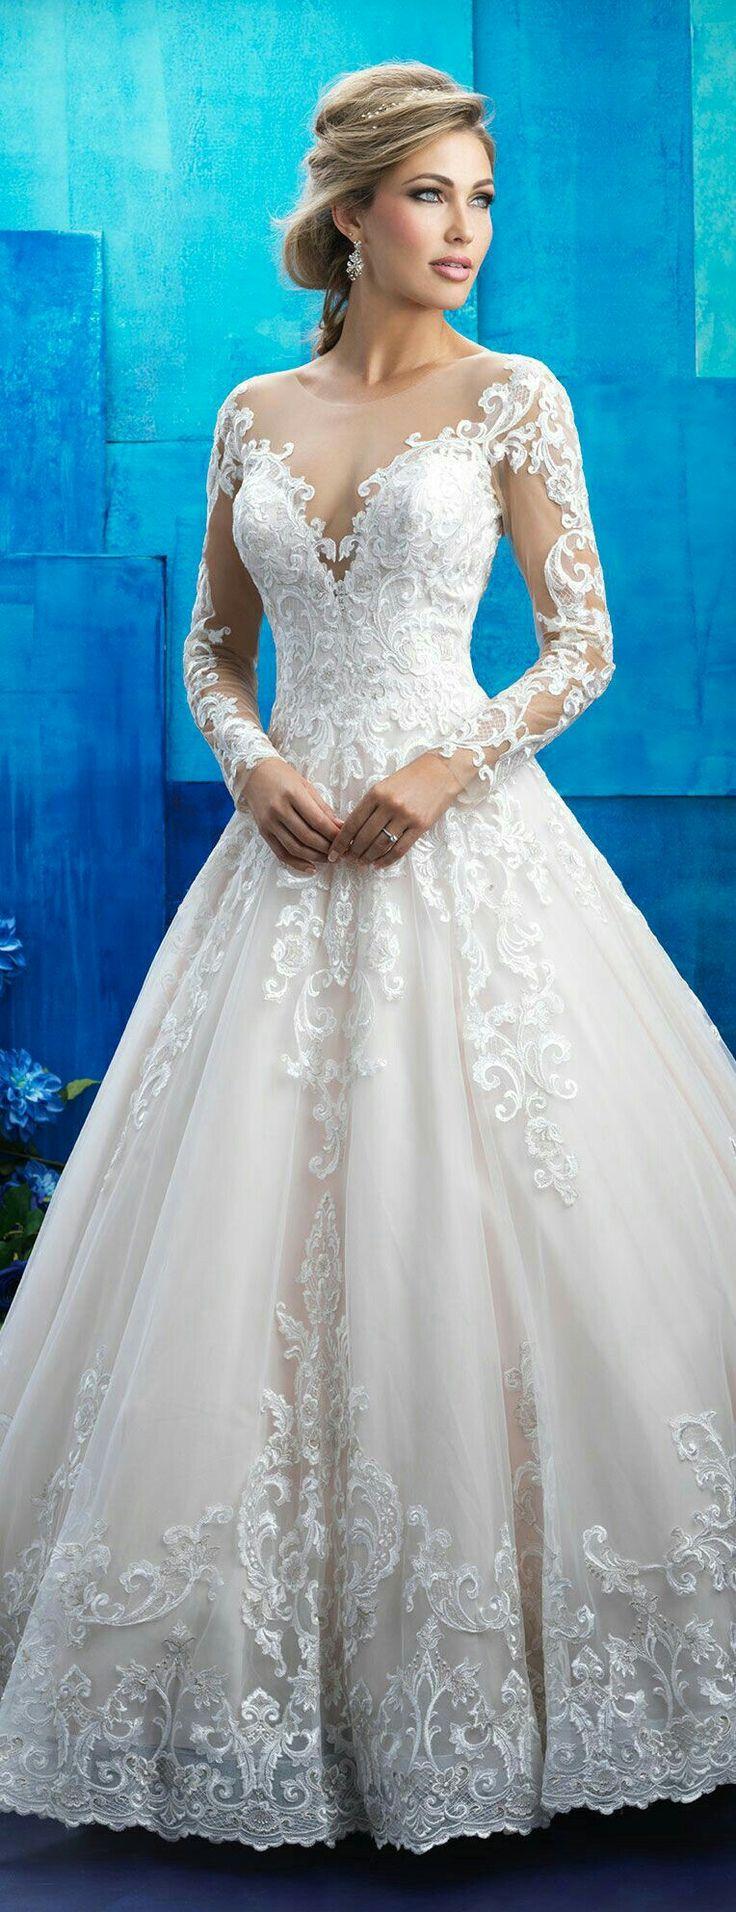 Hochzeit - Wedding Dress Shopping Tips